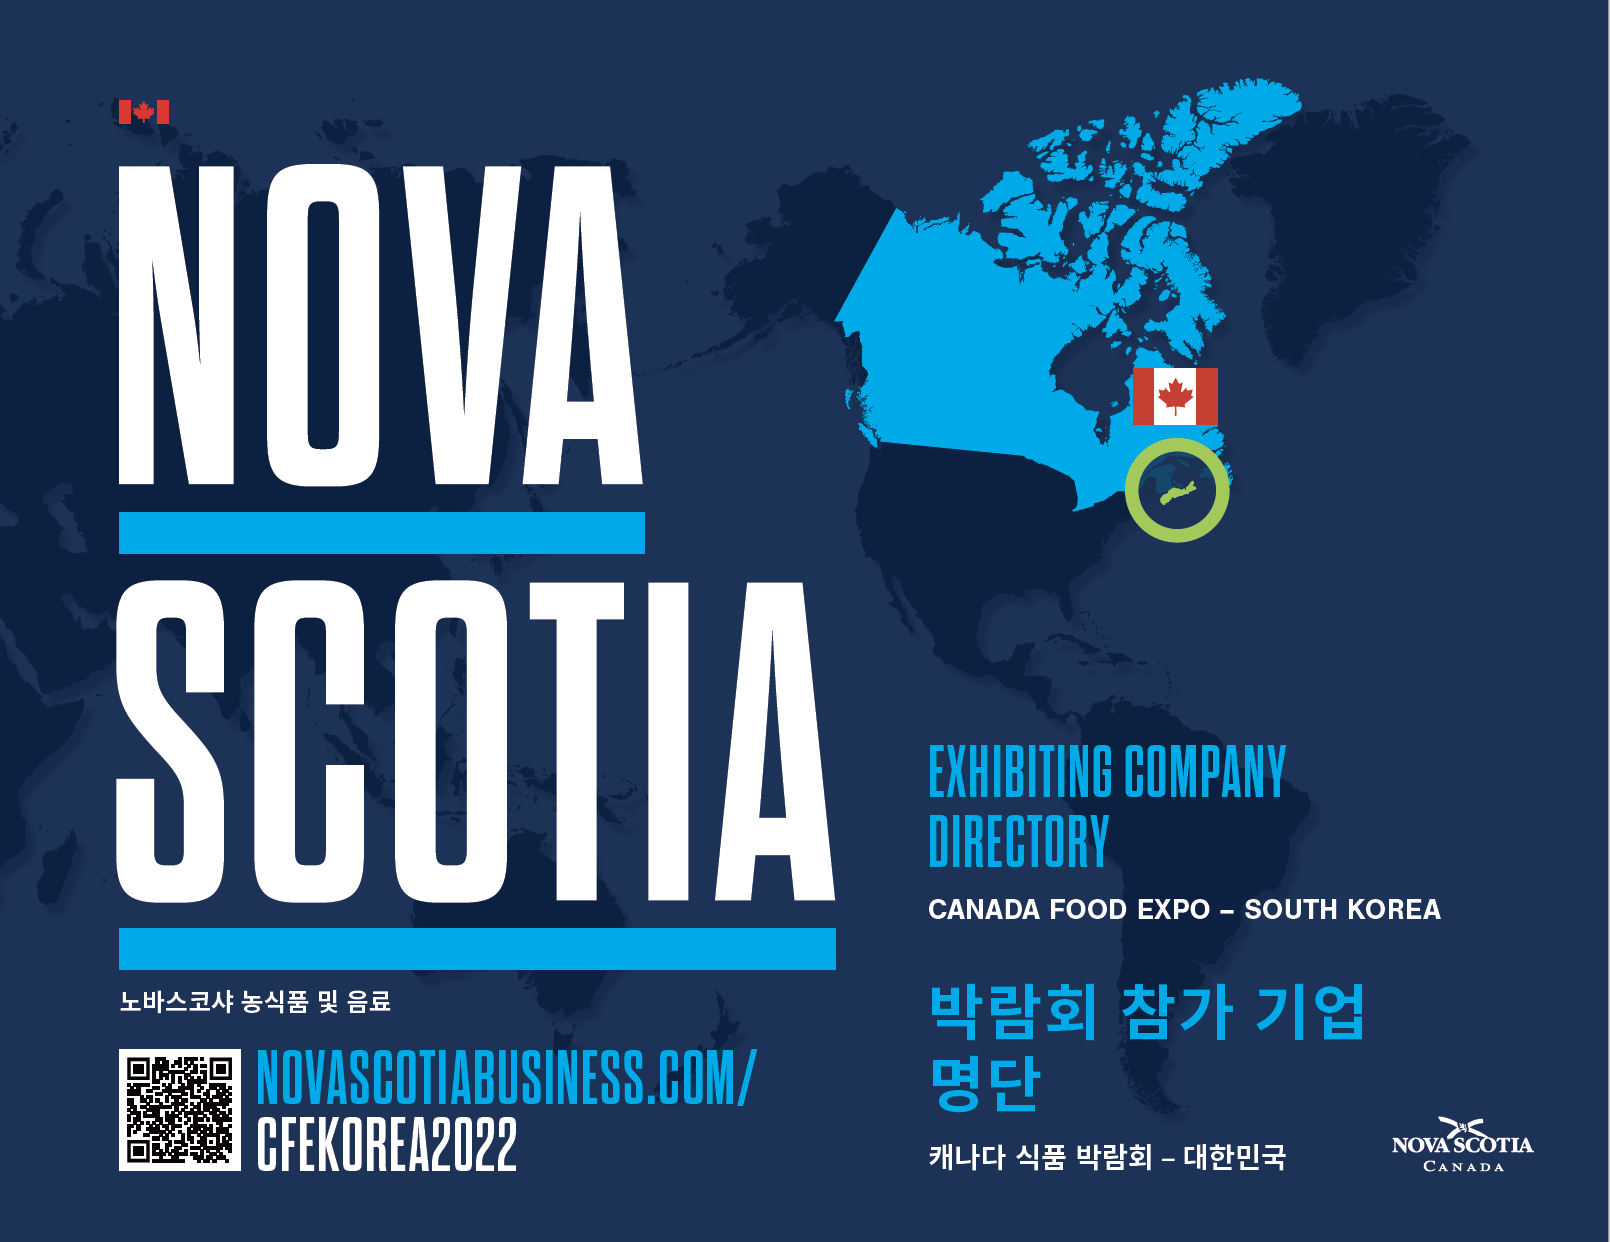 Cover image FHA Food & Beverage Singapore 2022 Nova Scotia Exhibiting Company Directory